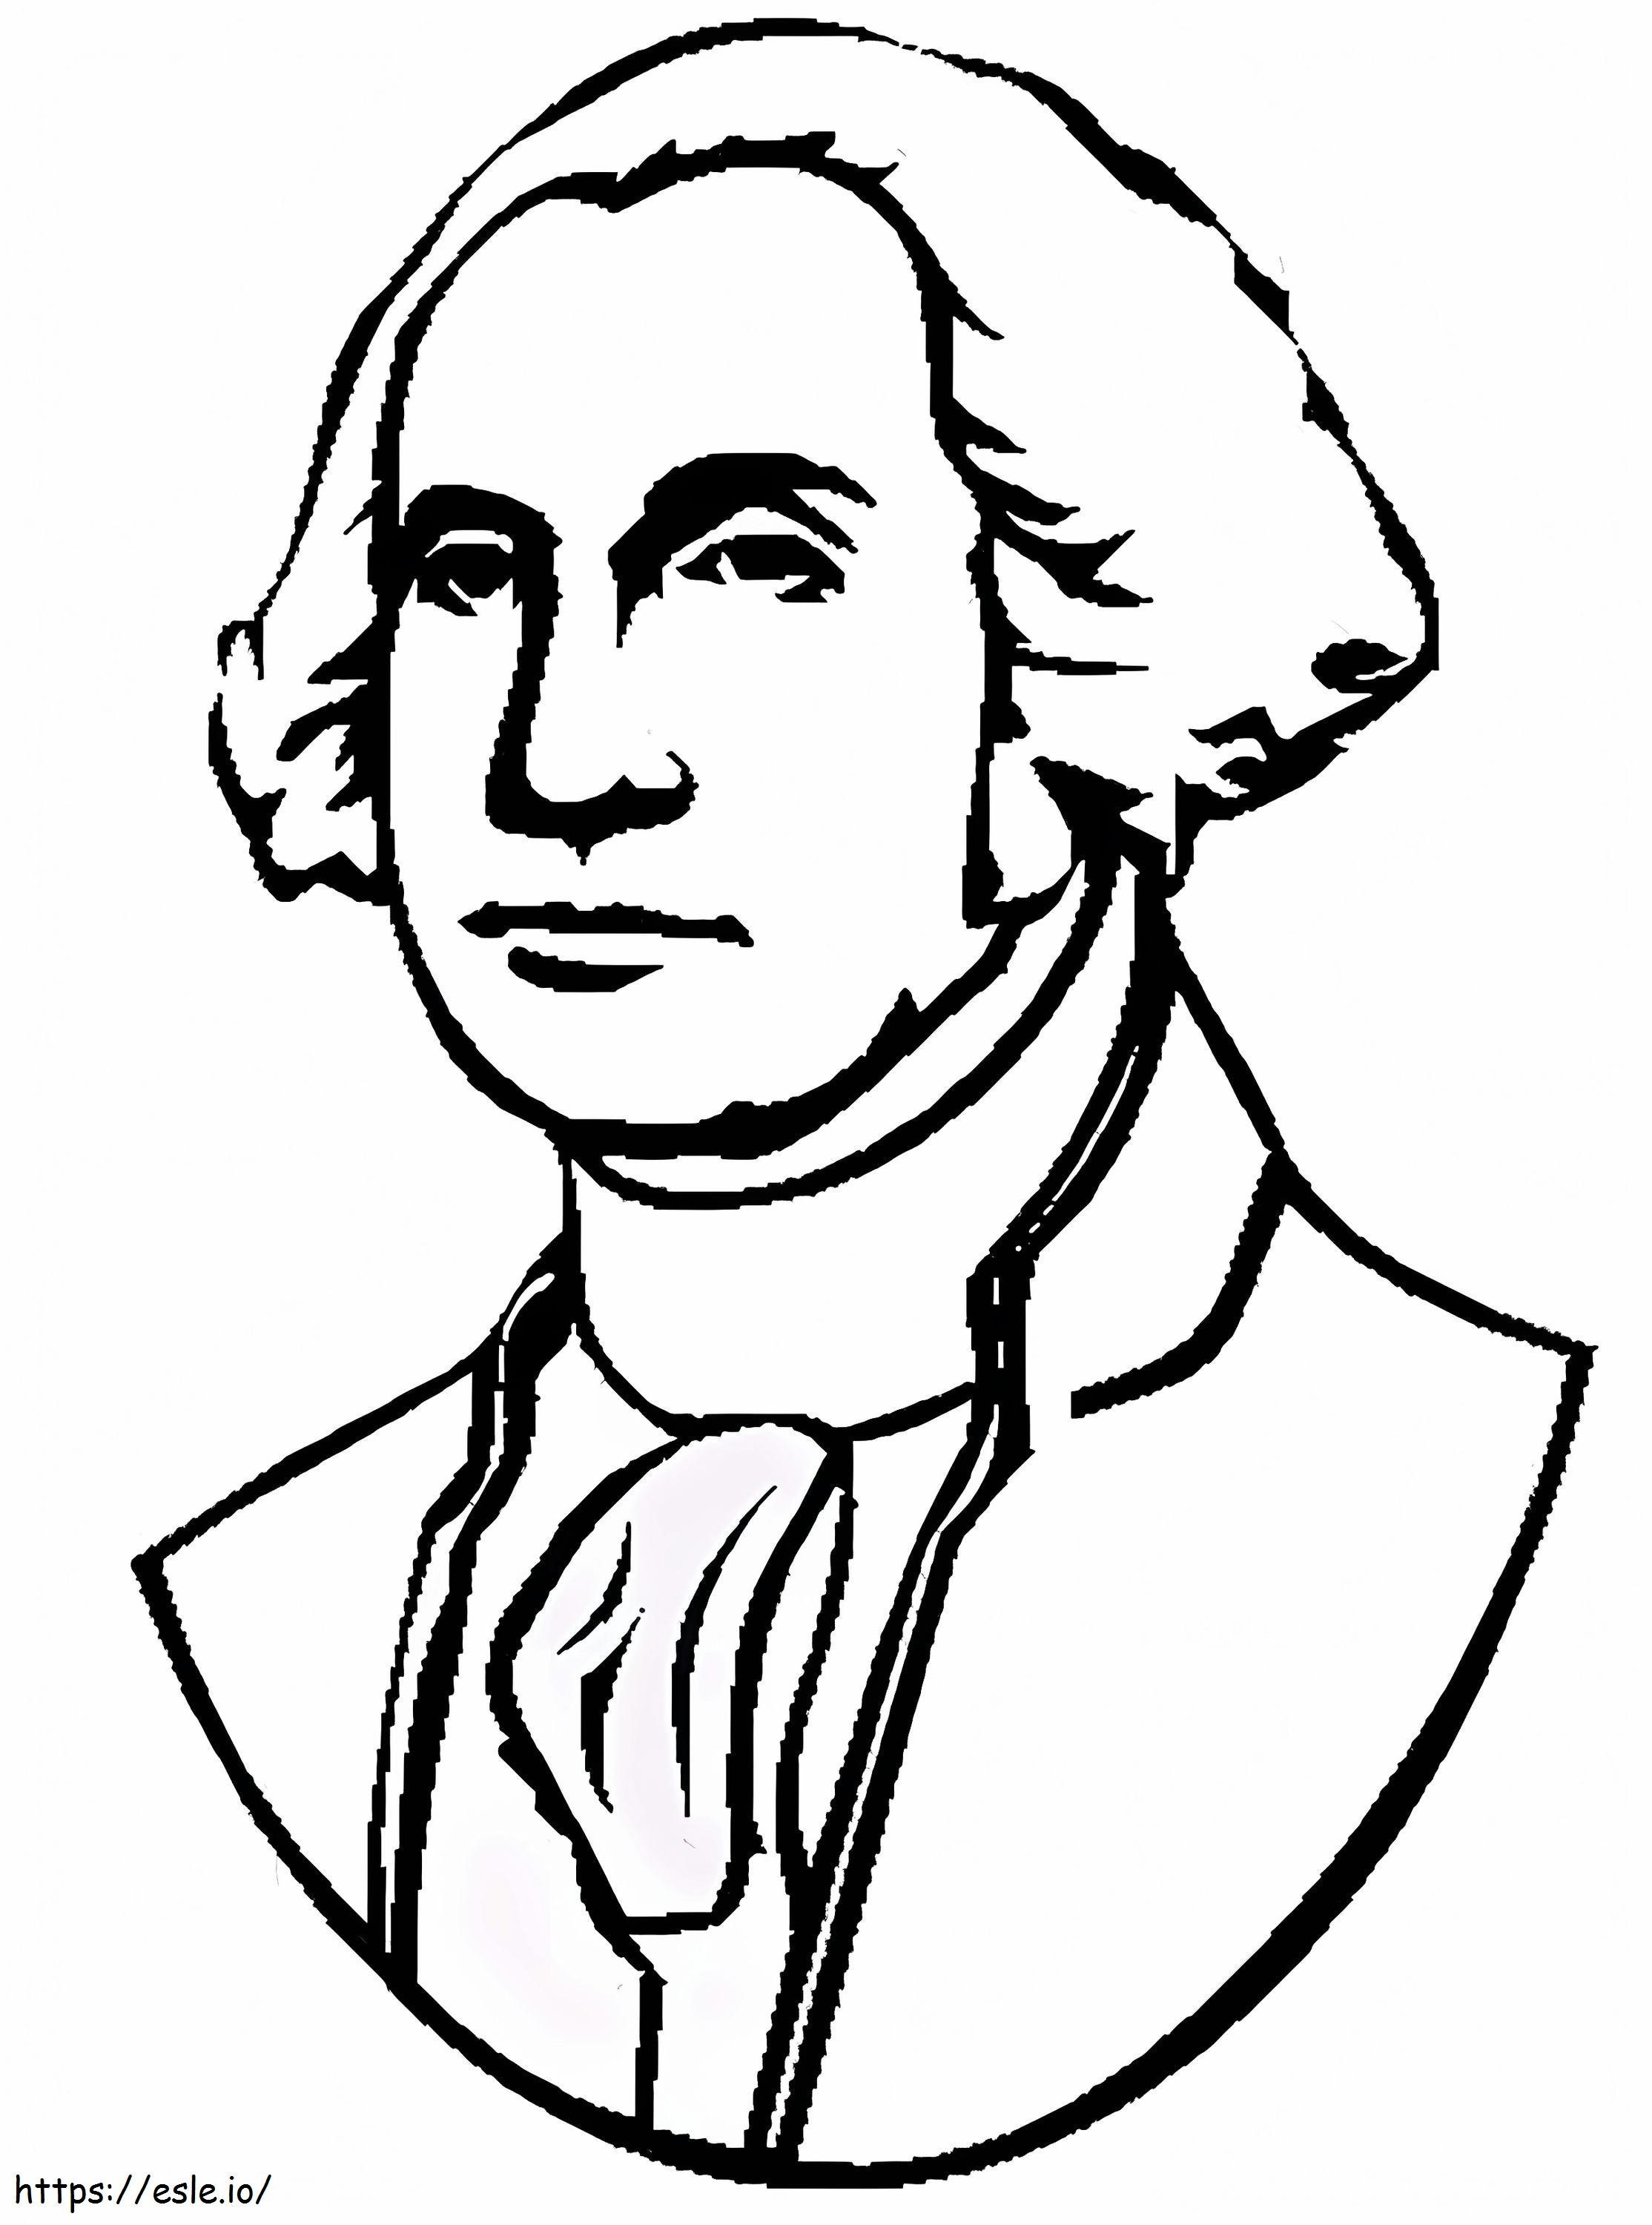 President George Washington coloring page